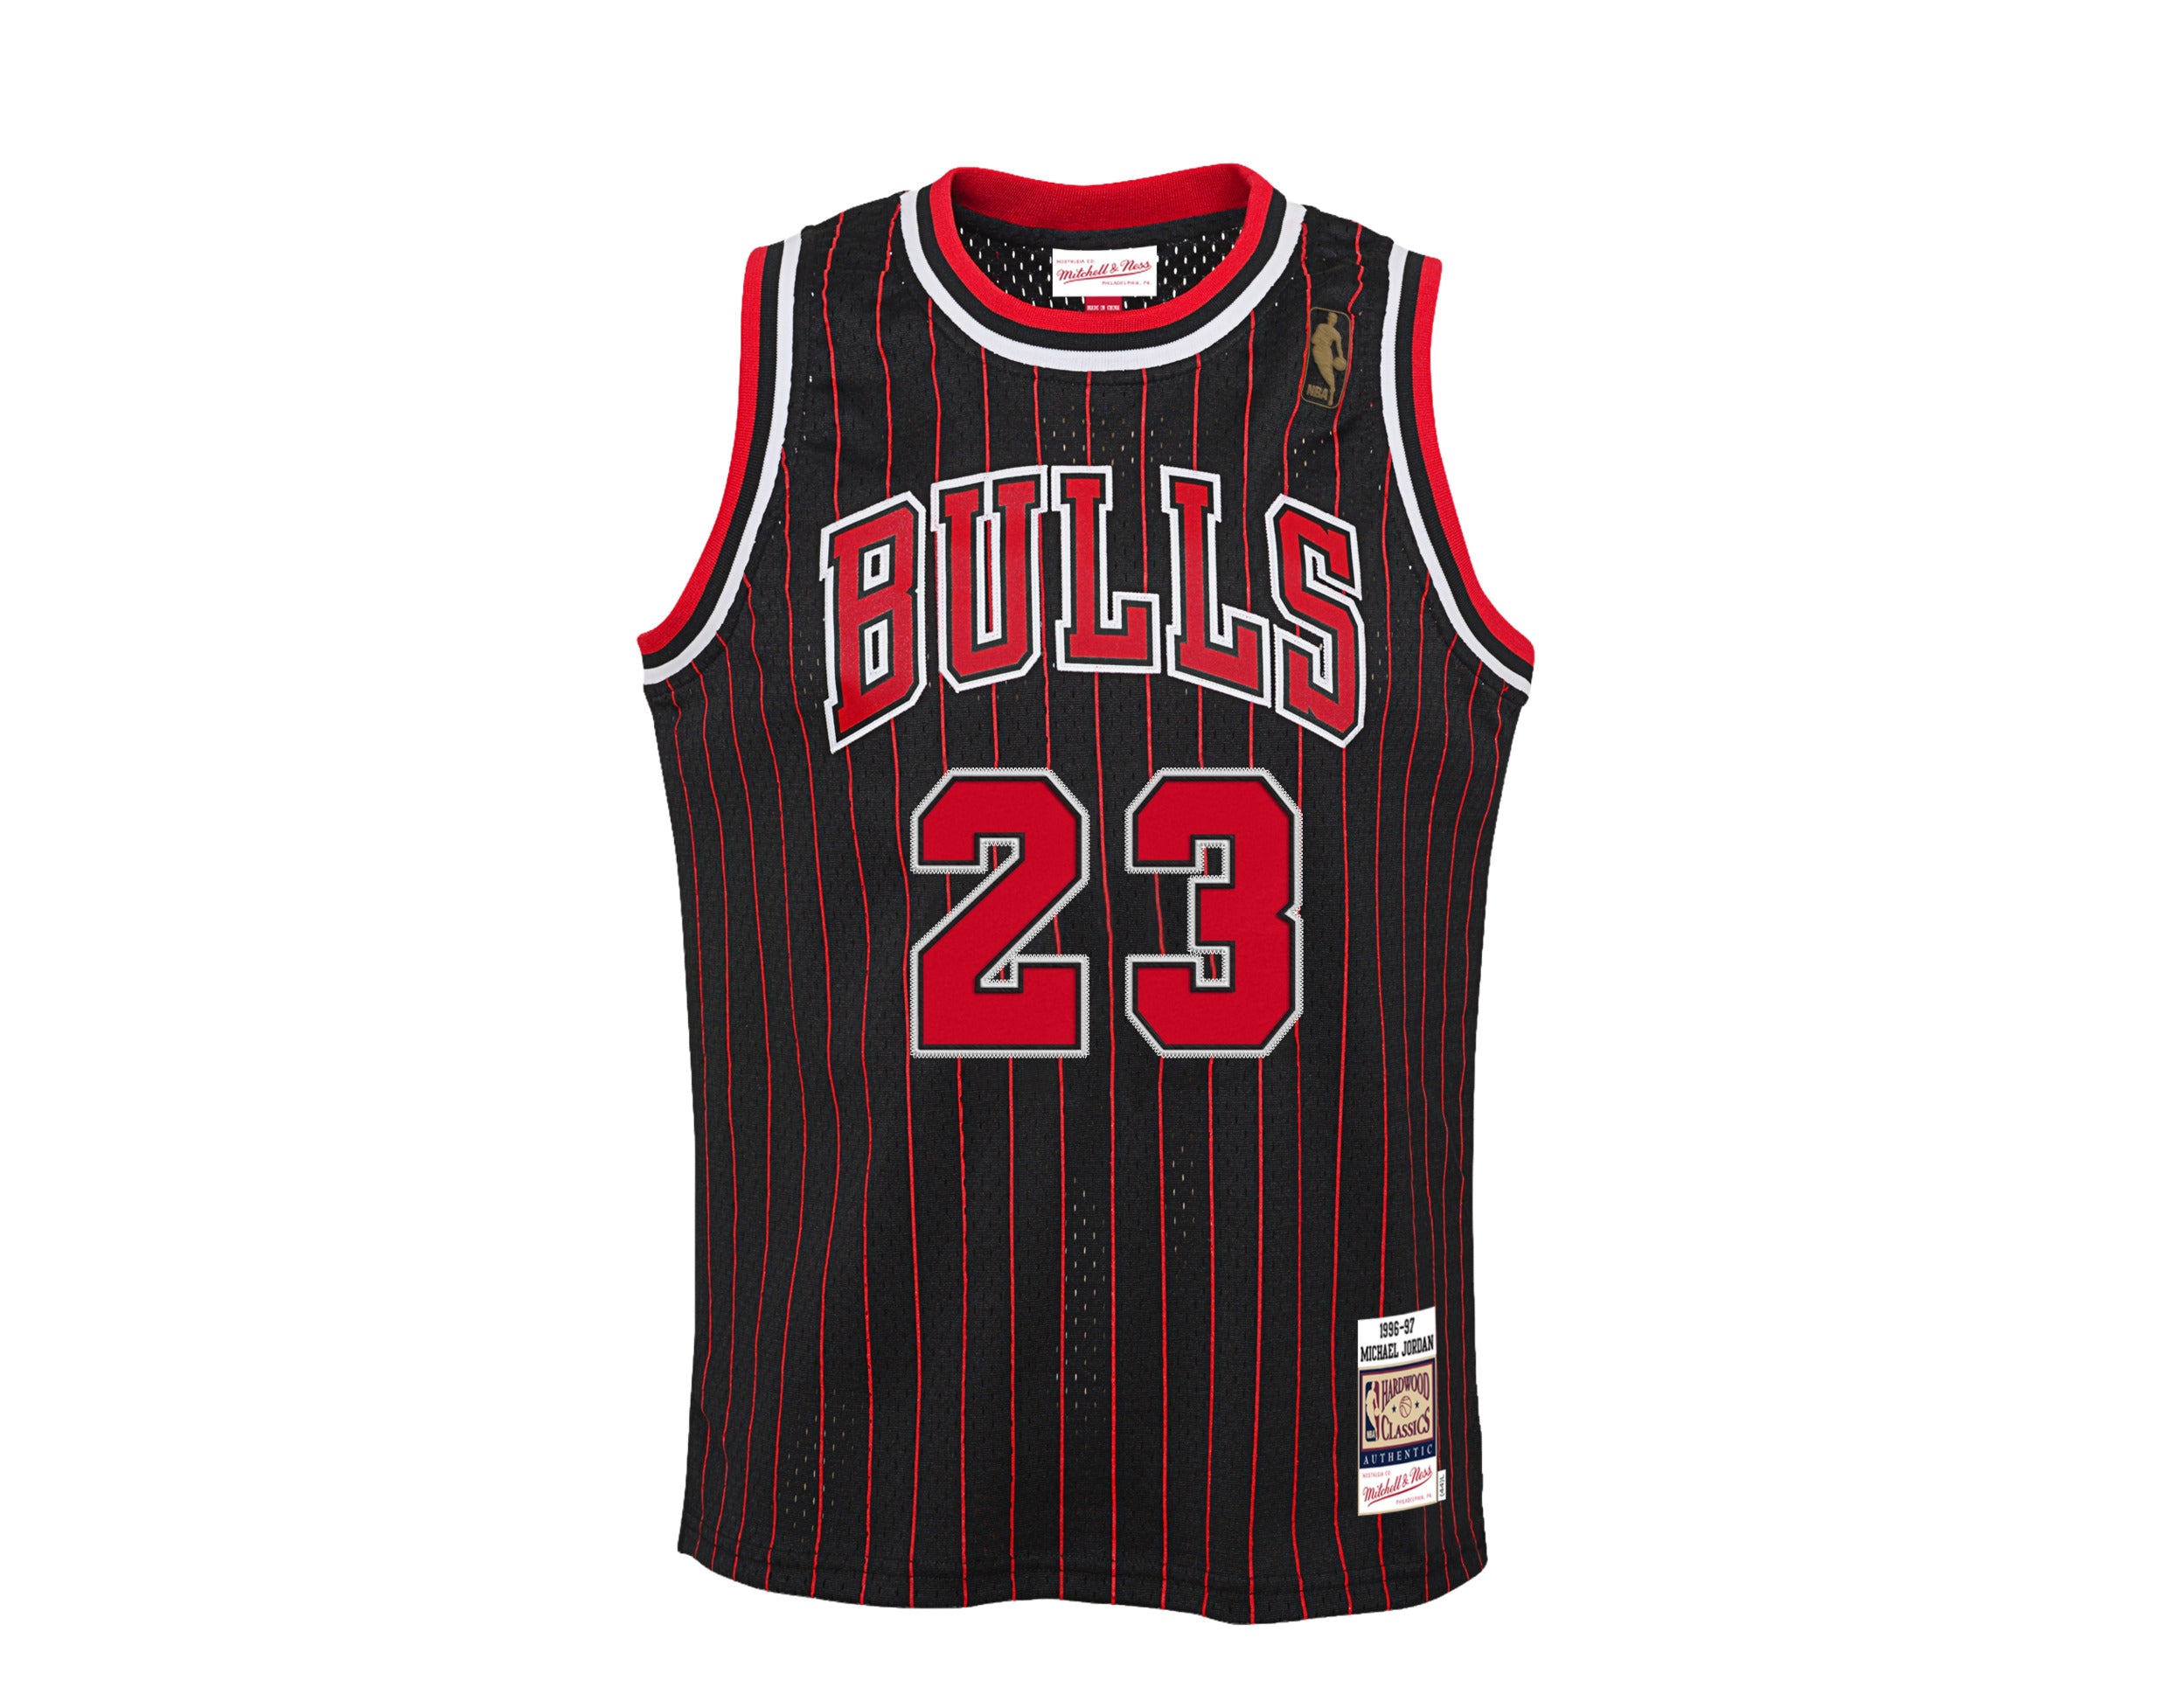 100% Authentic Michael Jordan Mitchell & Ness 96 97 Bulls Jersey